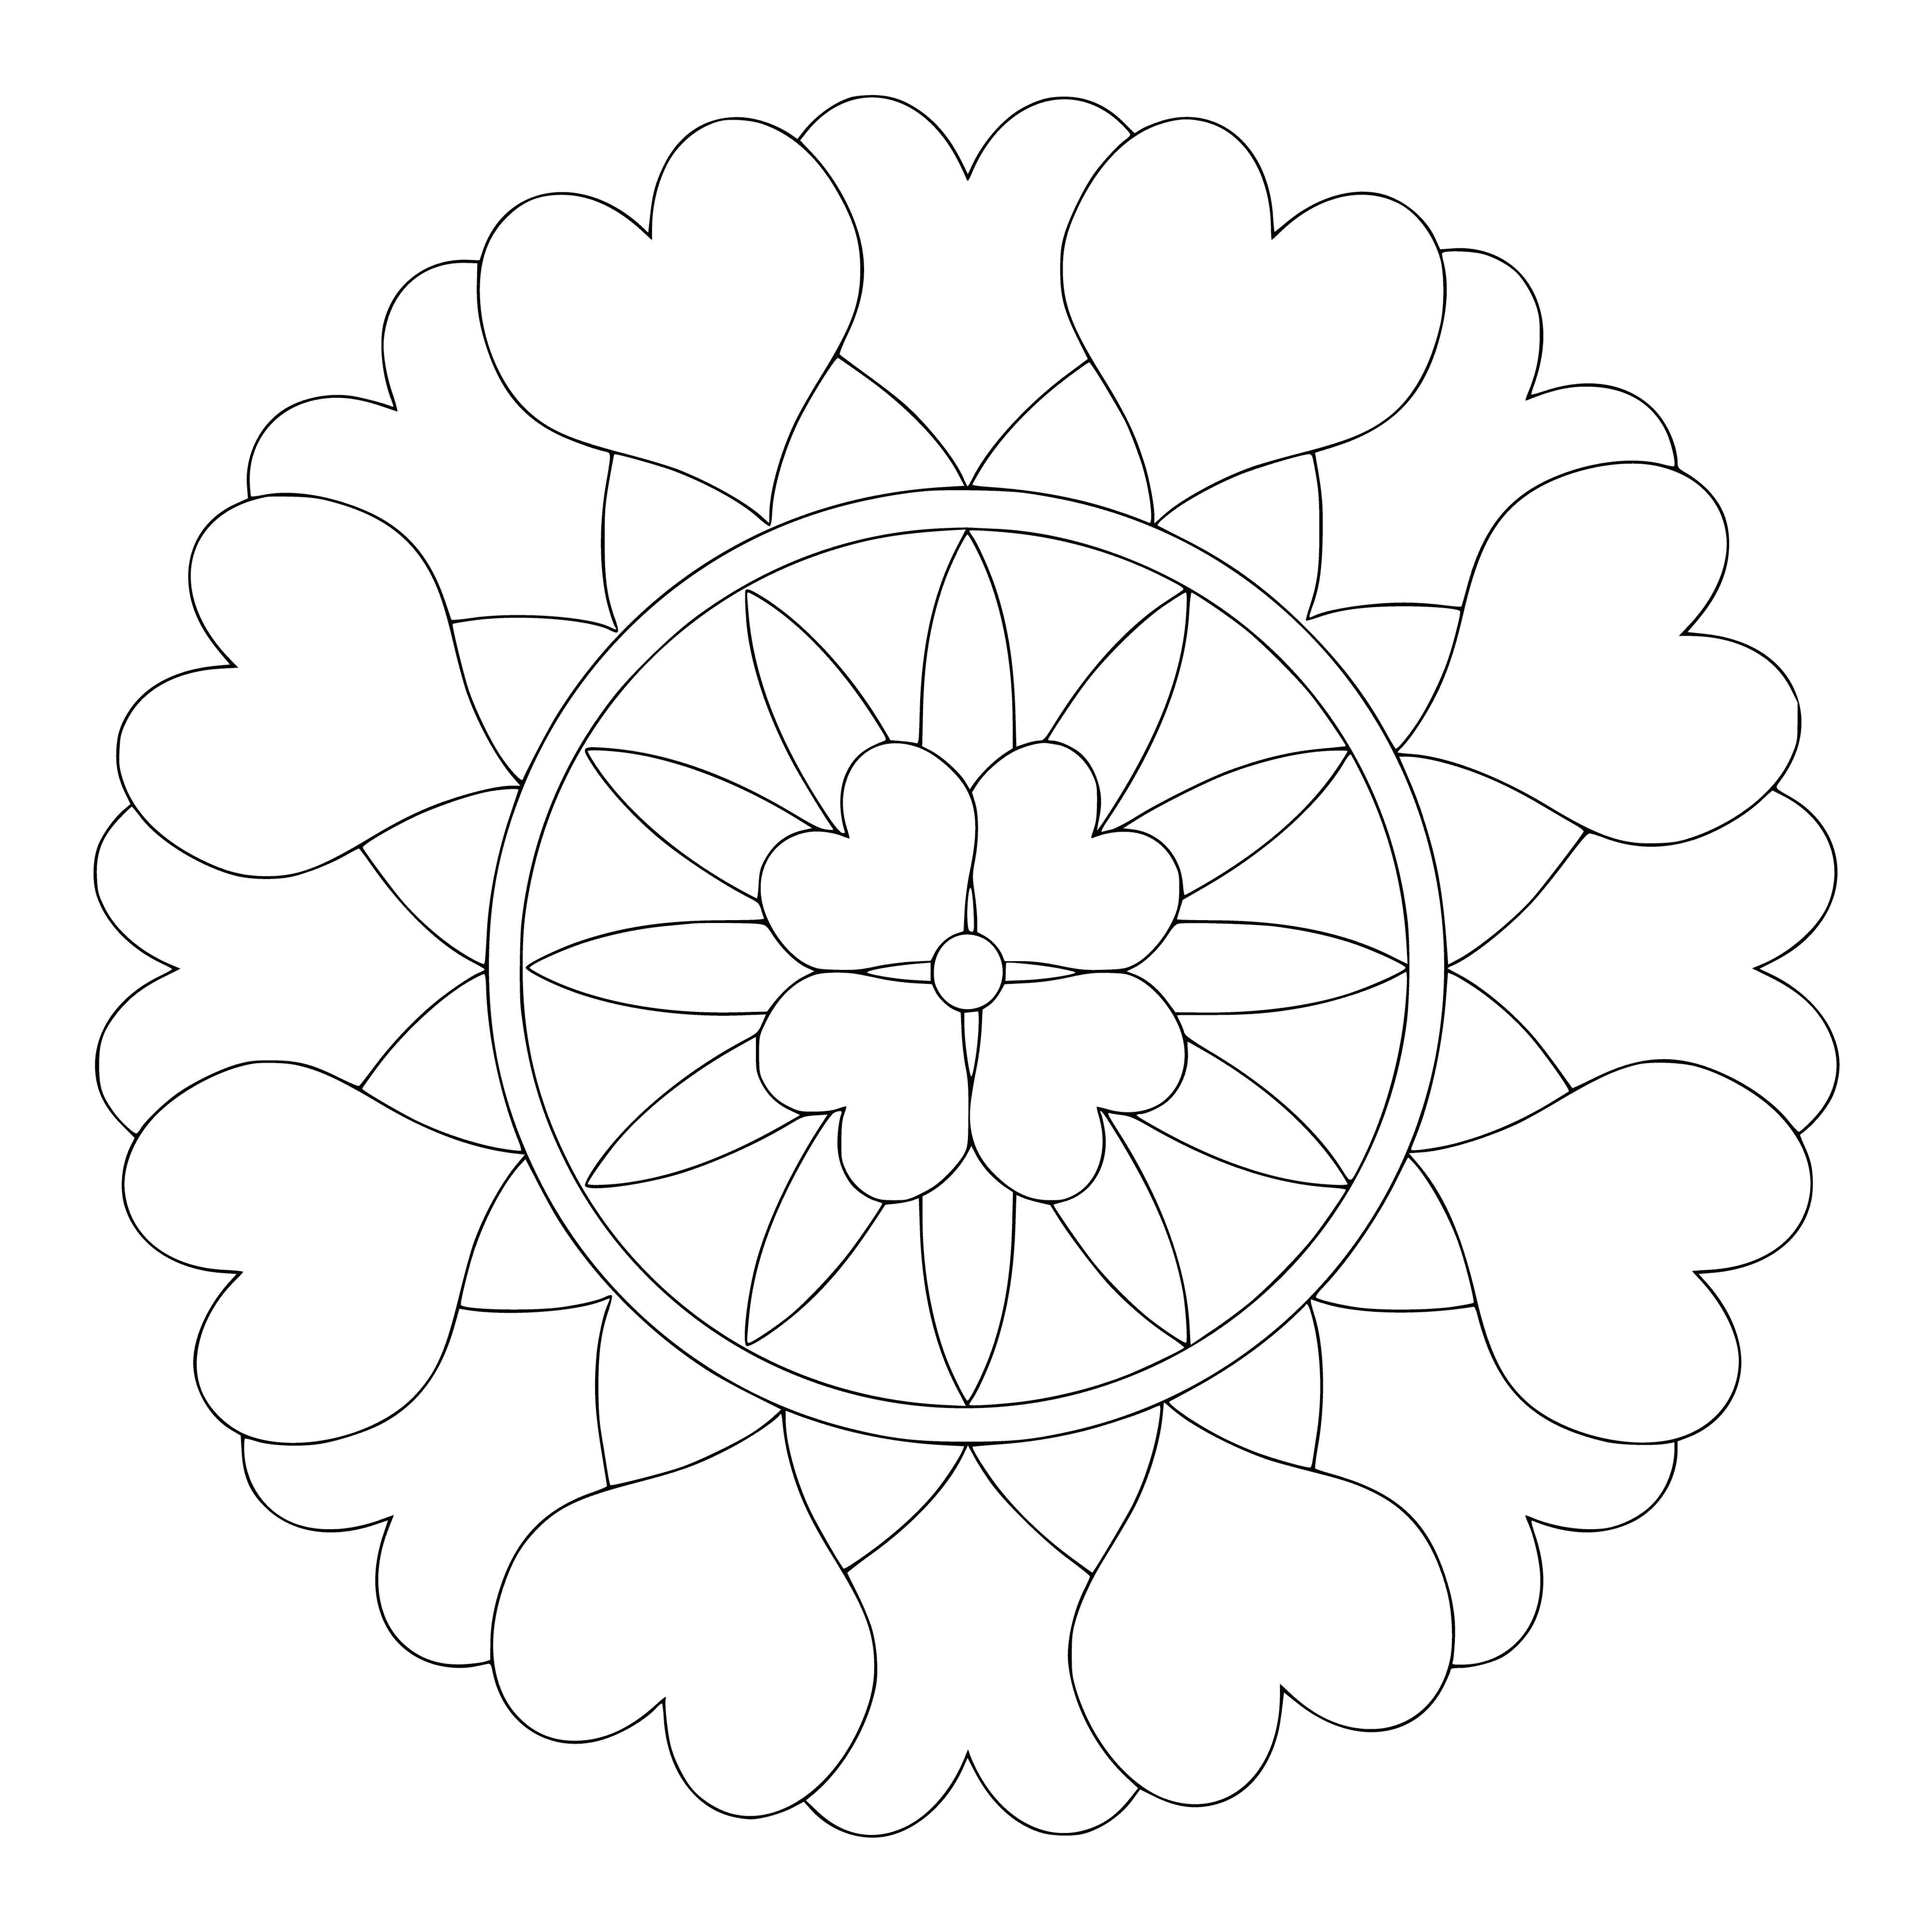 Mandala coloriage